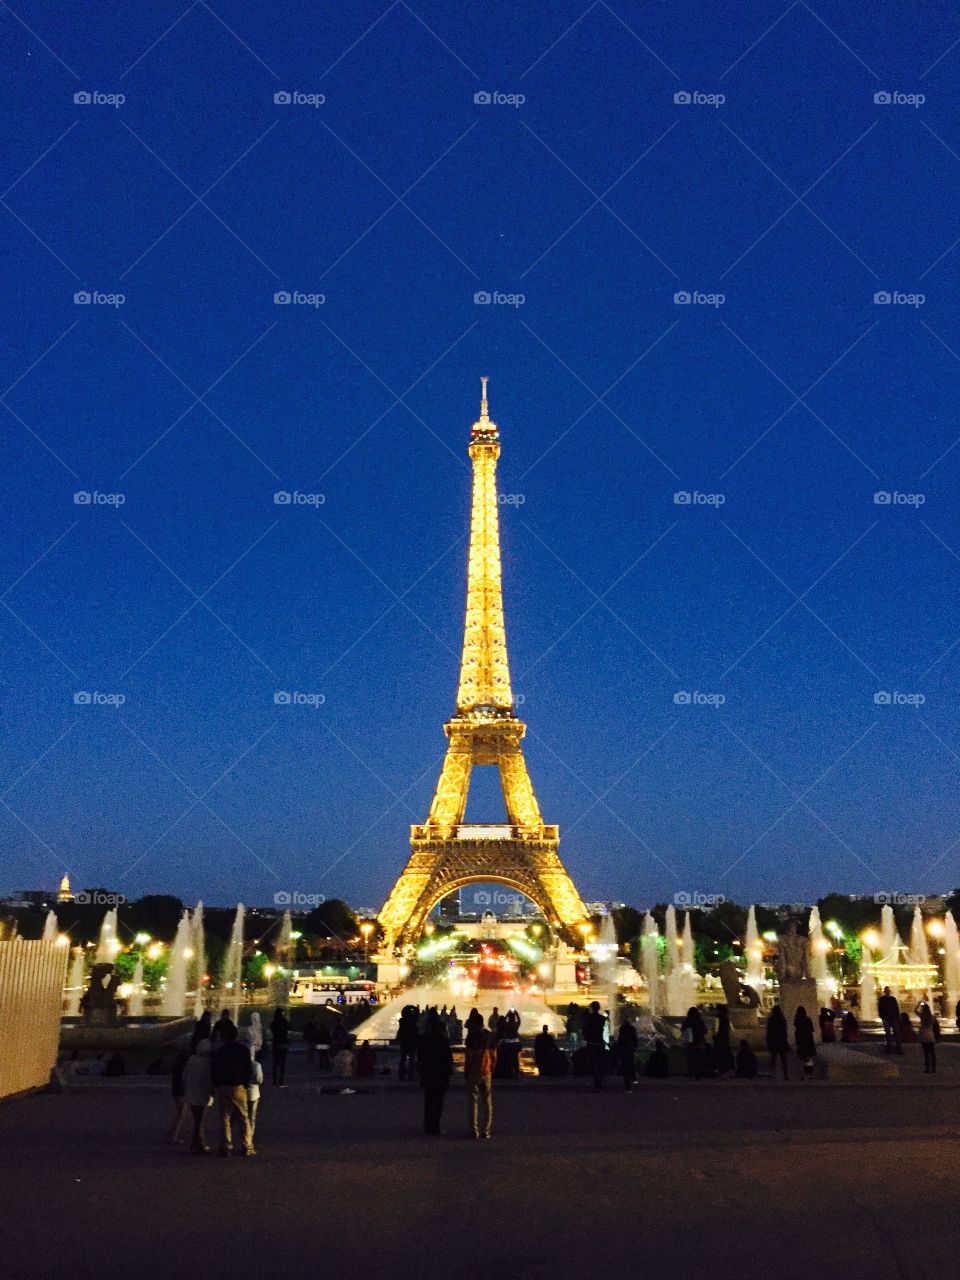 Eiffel Tower at night. Paris France 